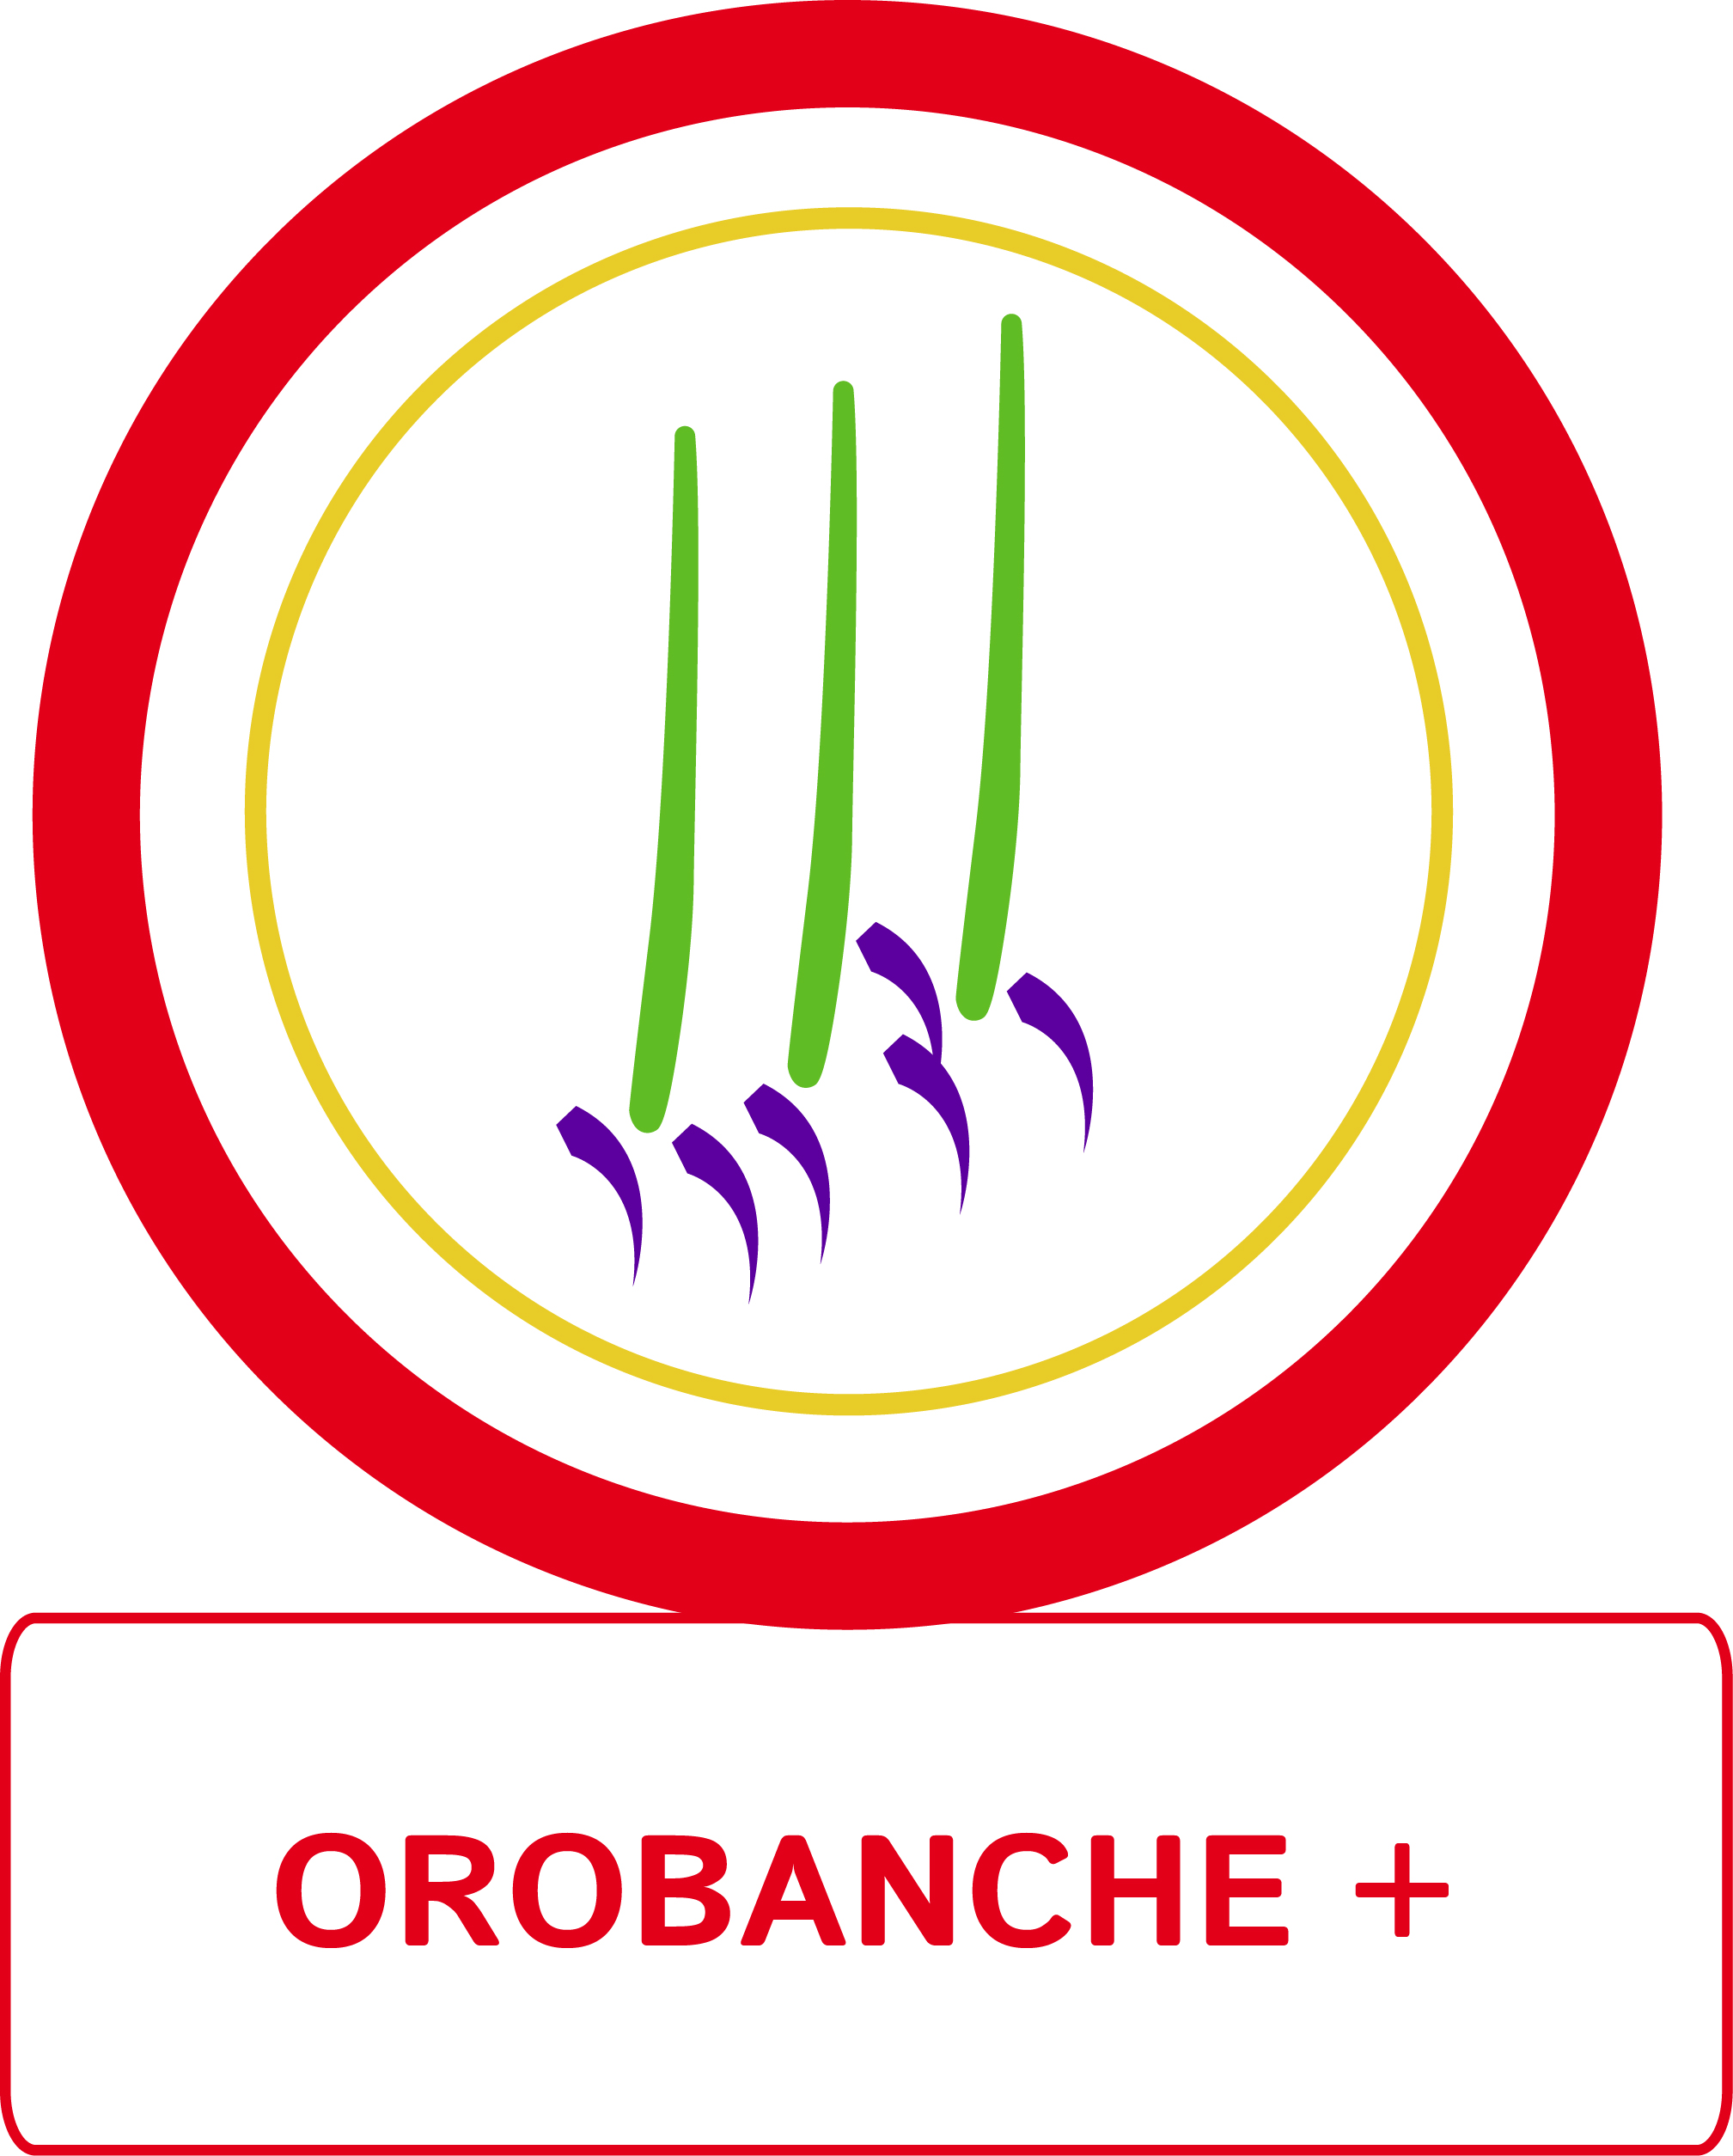 Orobanche +